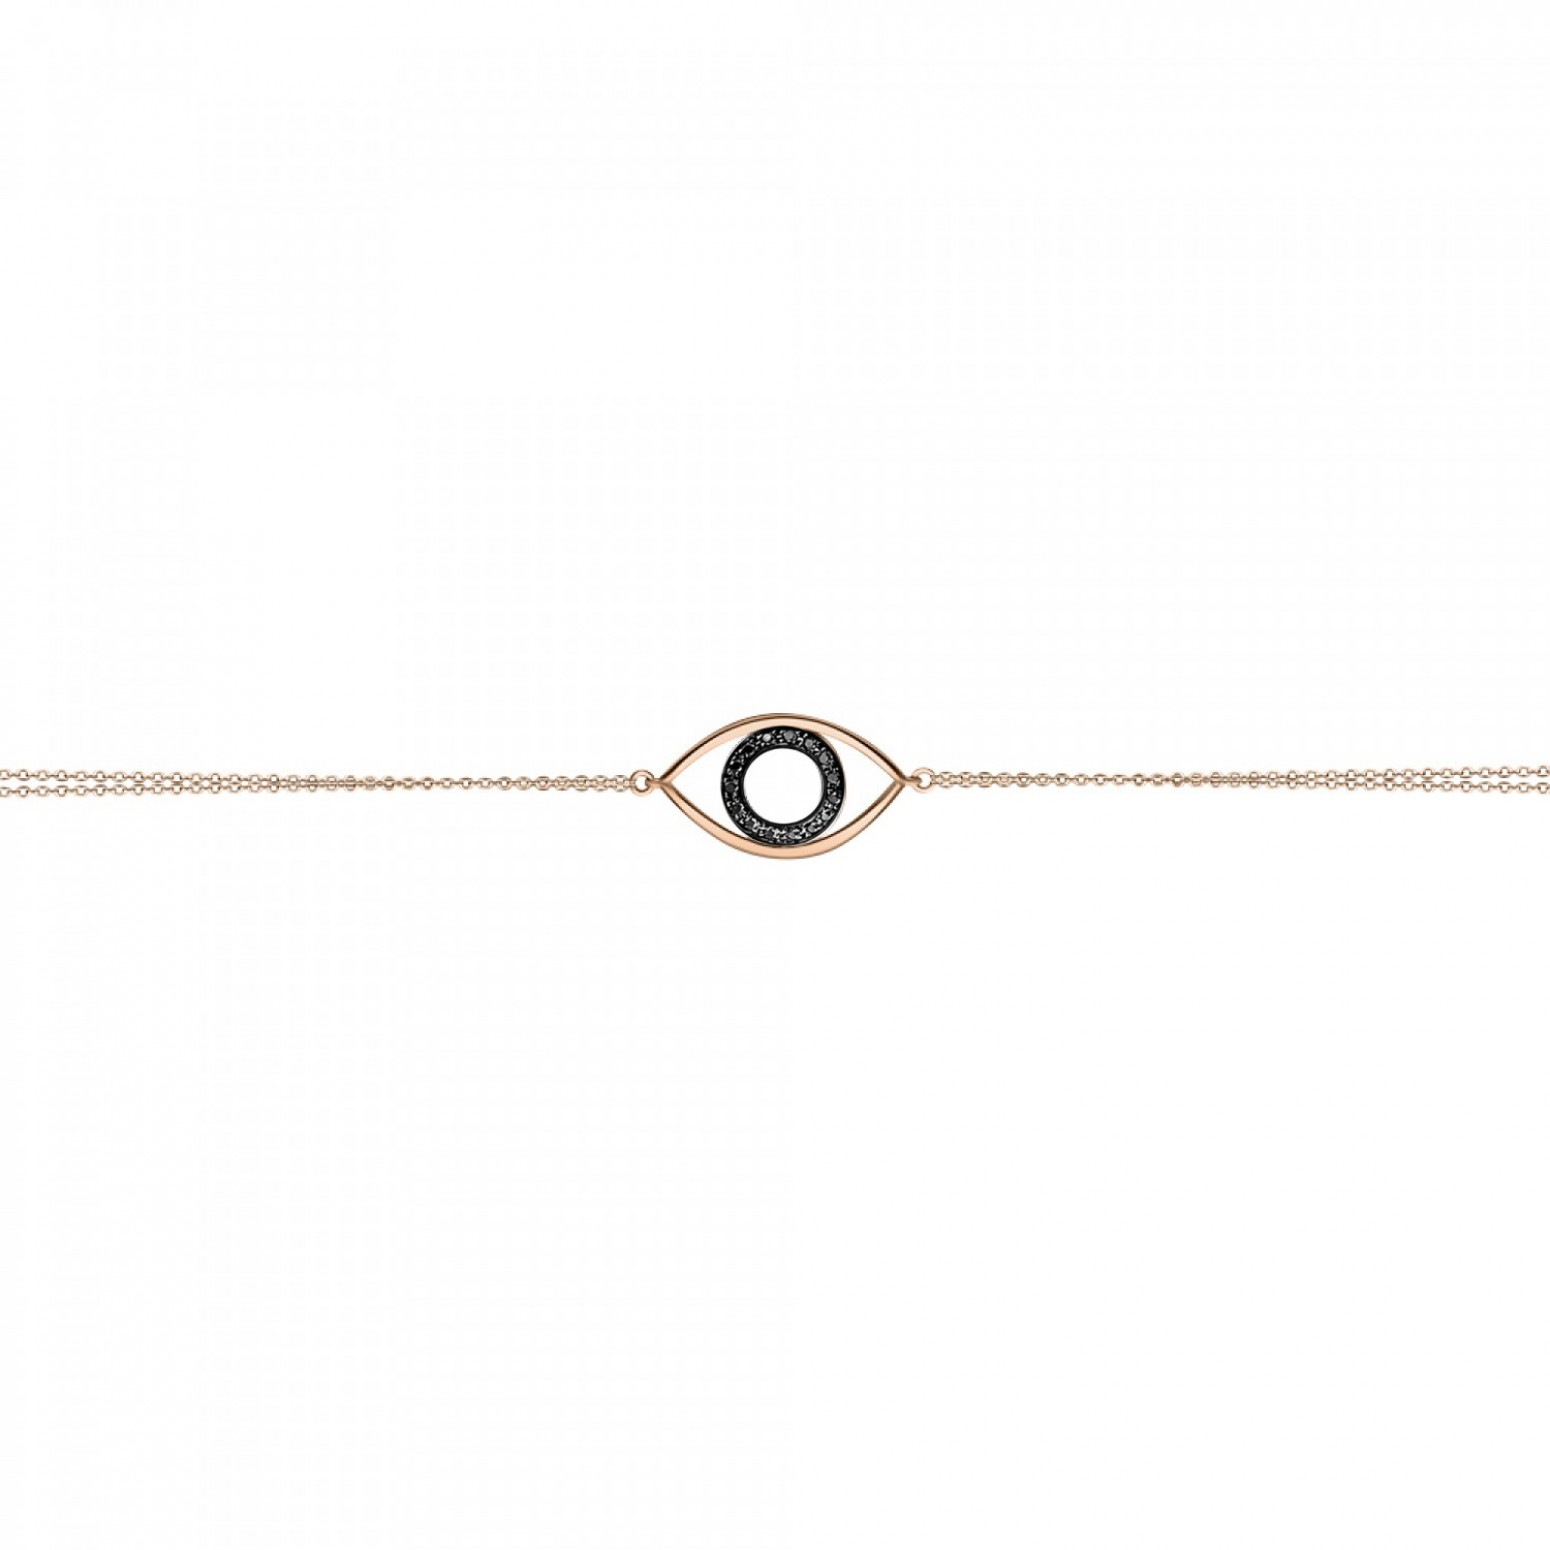 Eye bracelet, Κ14 pink gold with black diamonds 0.06ct, br1642 BRACELETS Κοσμηματα - chrilia.gr